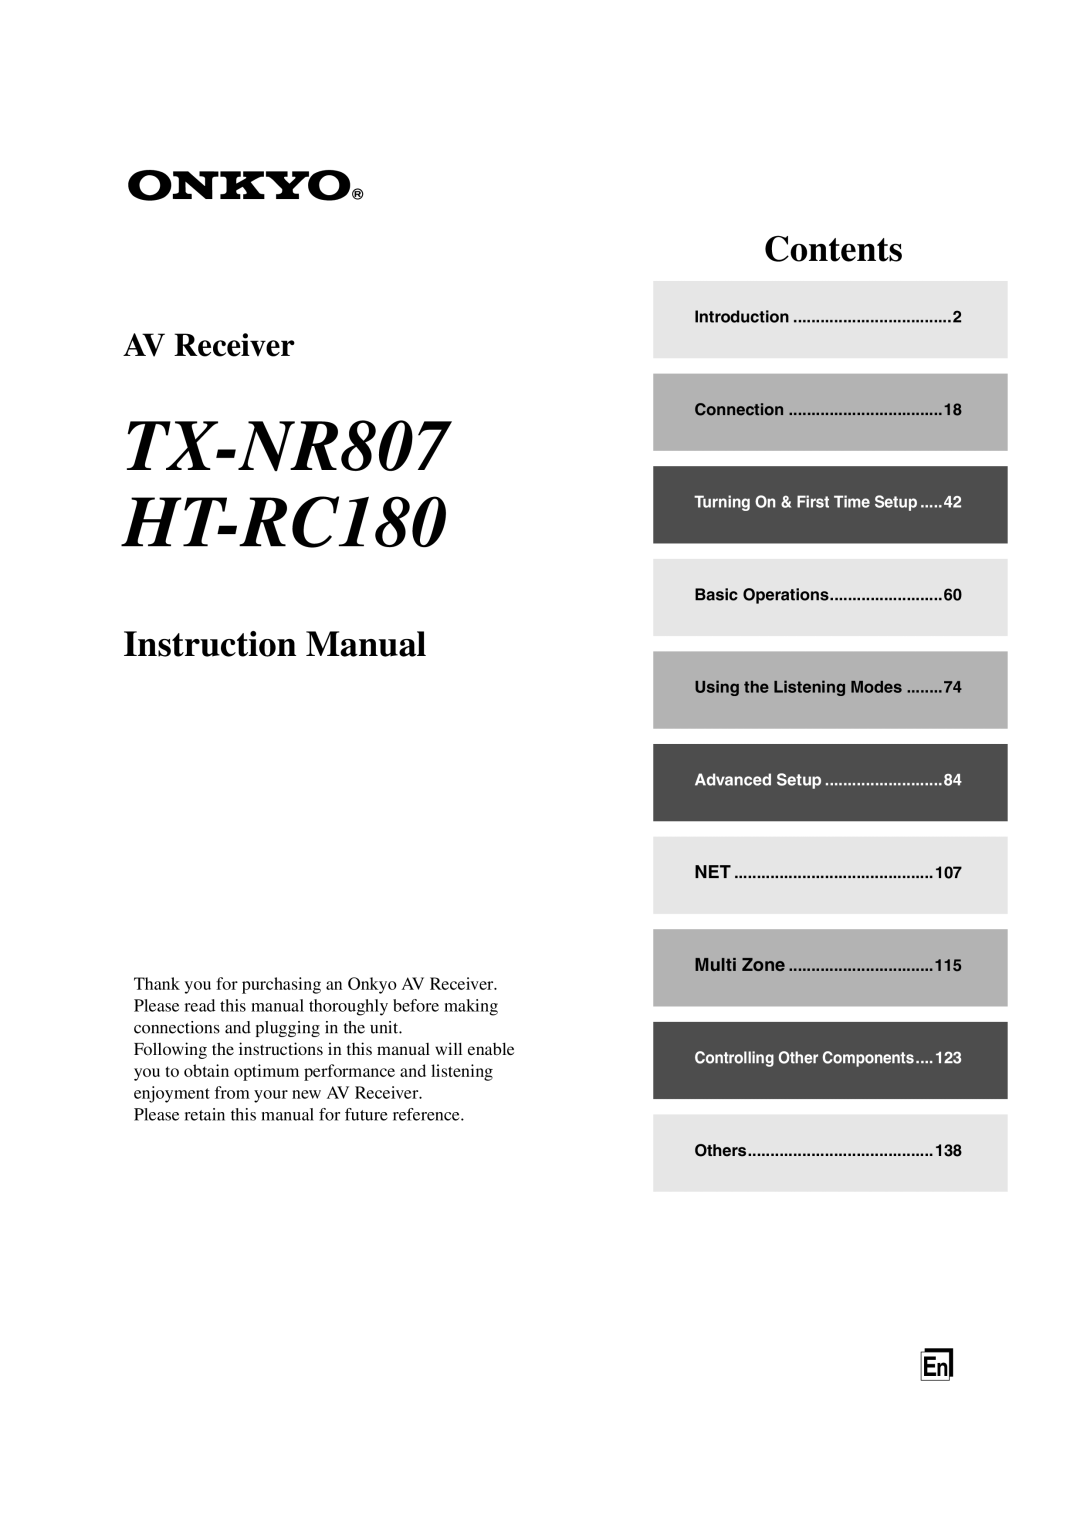 Onkyo 29400021 instruction manual TX-NR807 HT-RC180, Contents, AV Receiver 